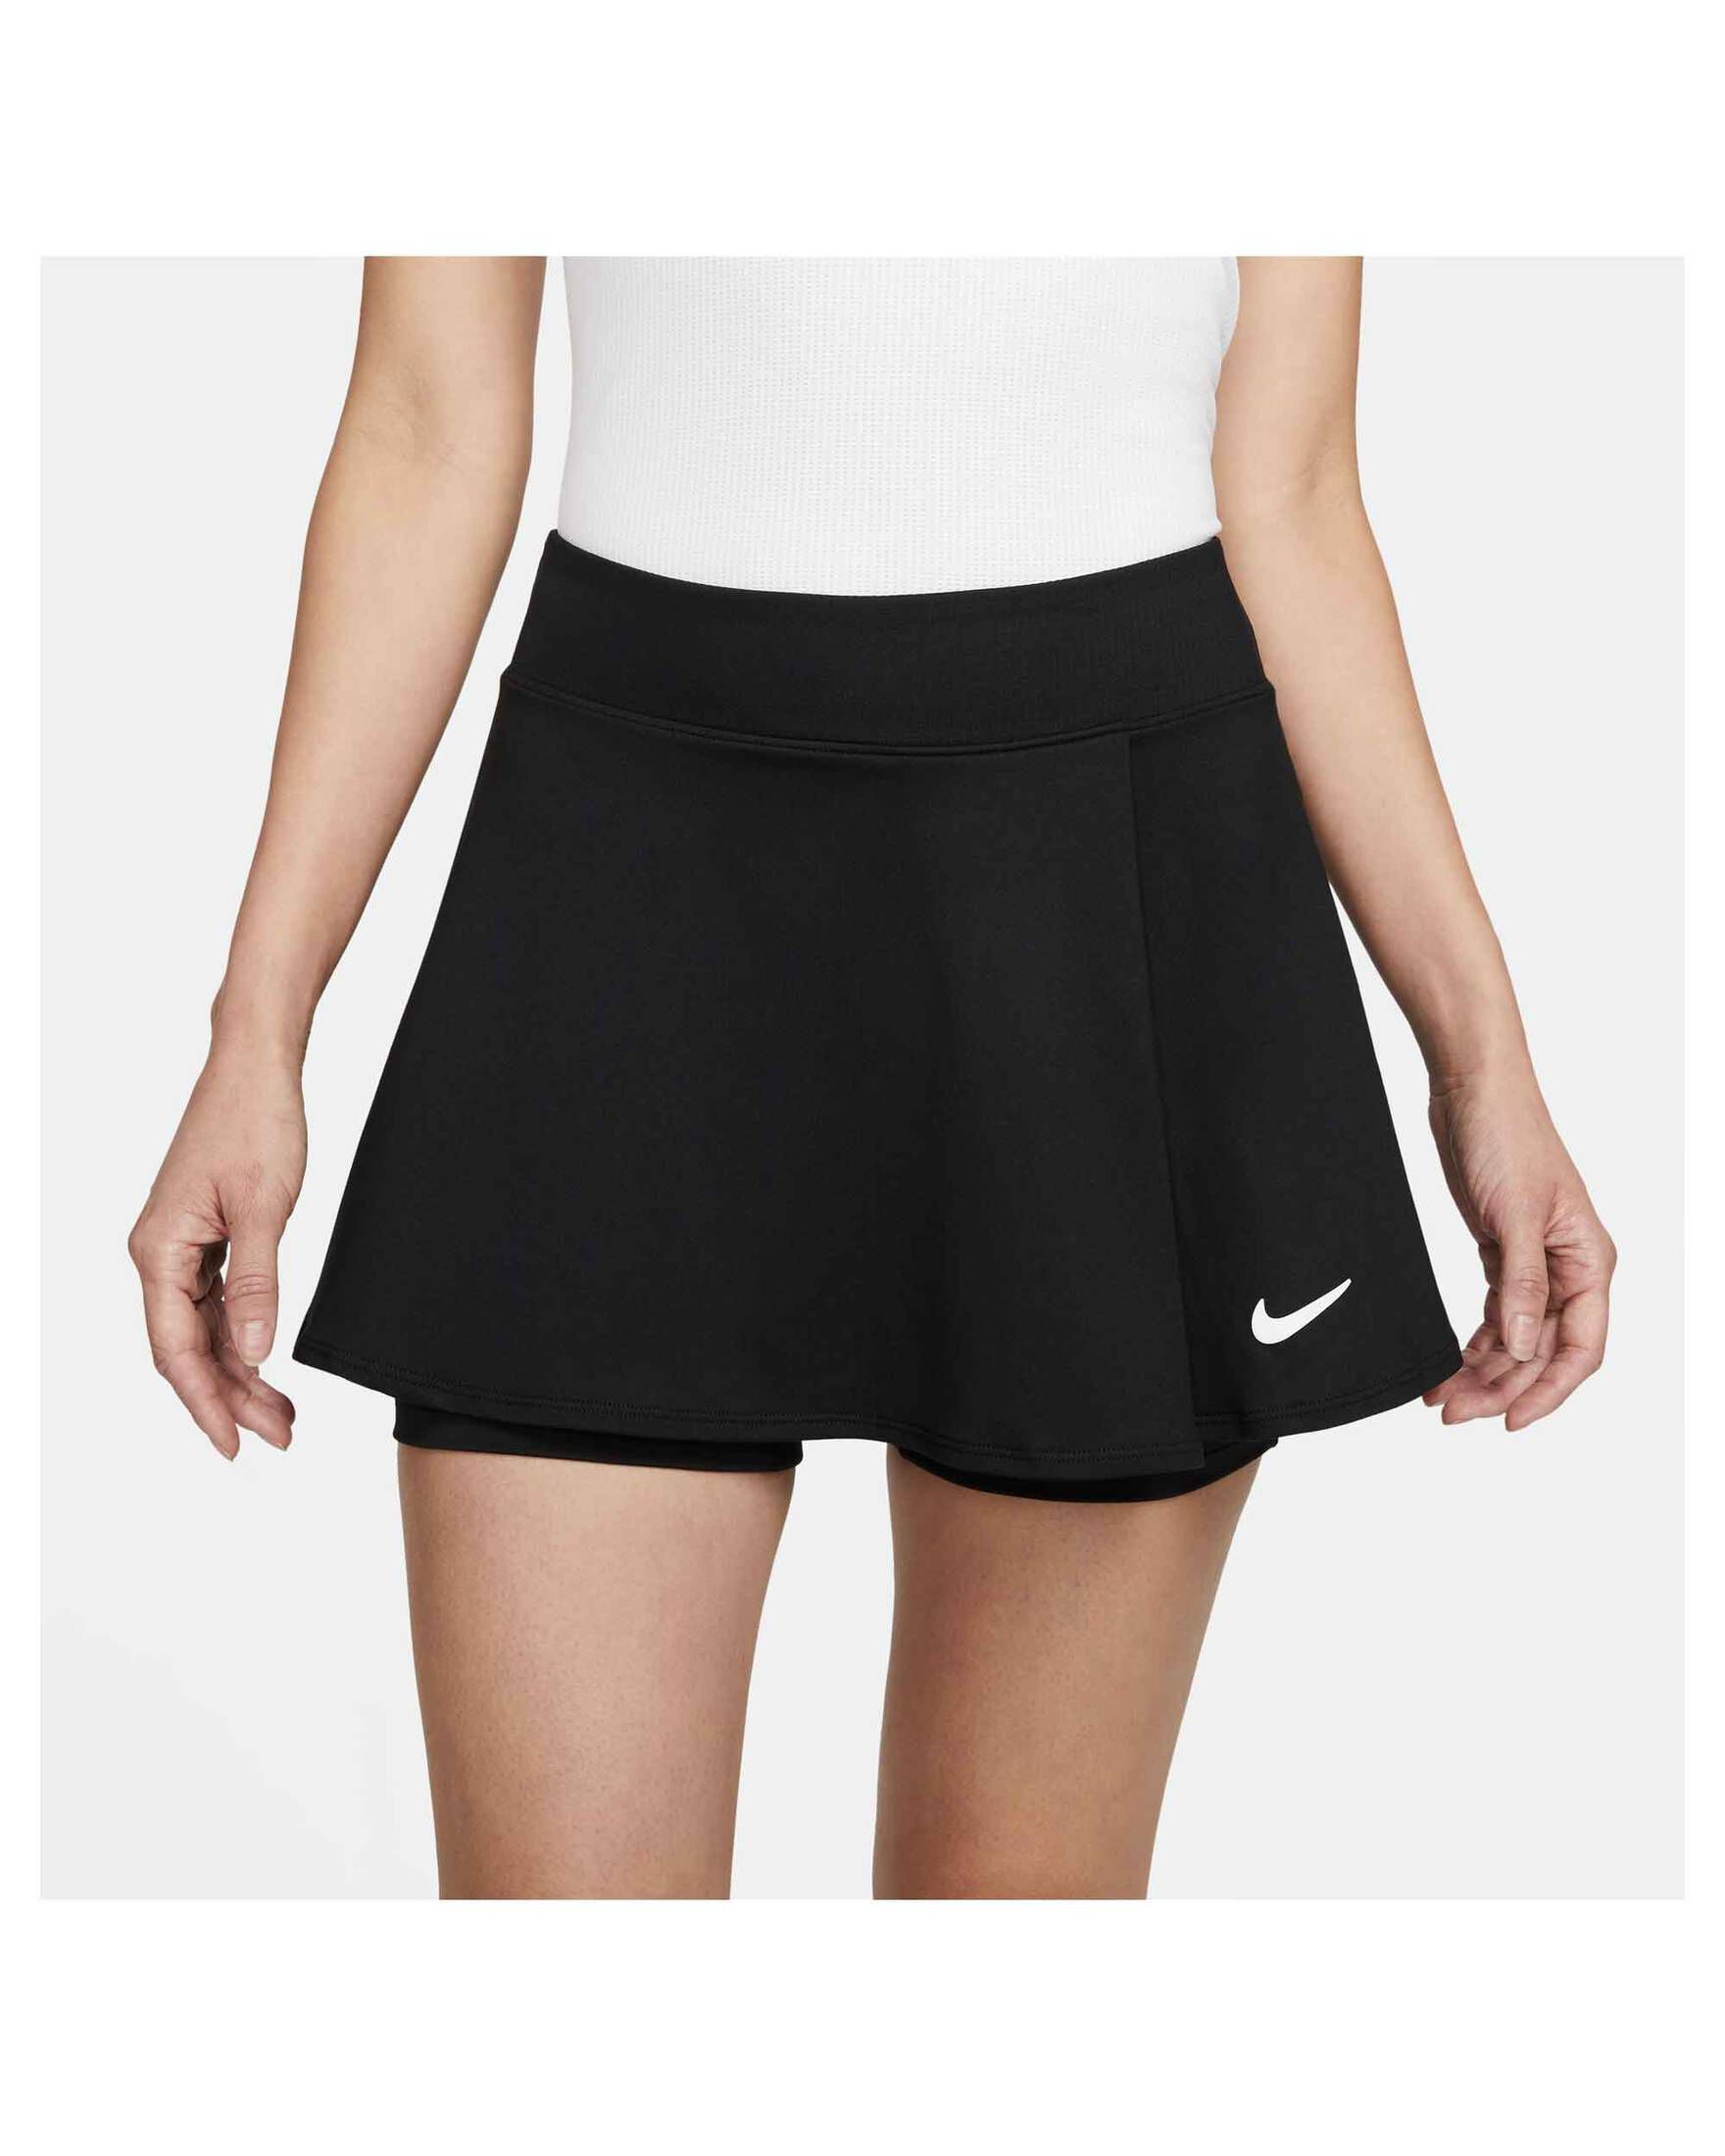 Nike Damen Tennisrock NIKECOURT VICTORY kaufen engelhorn